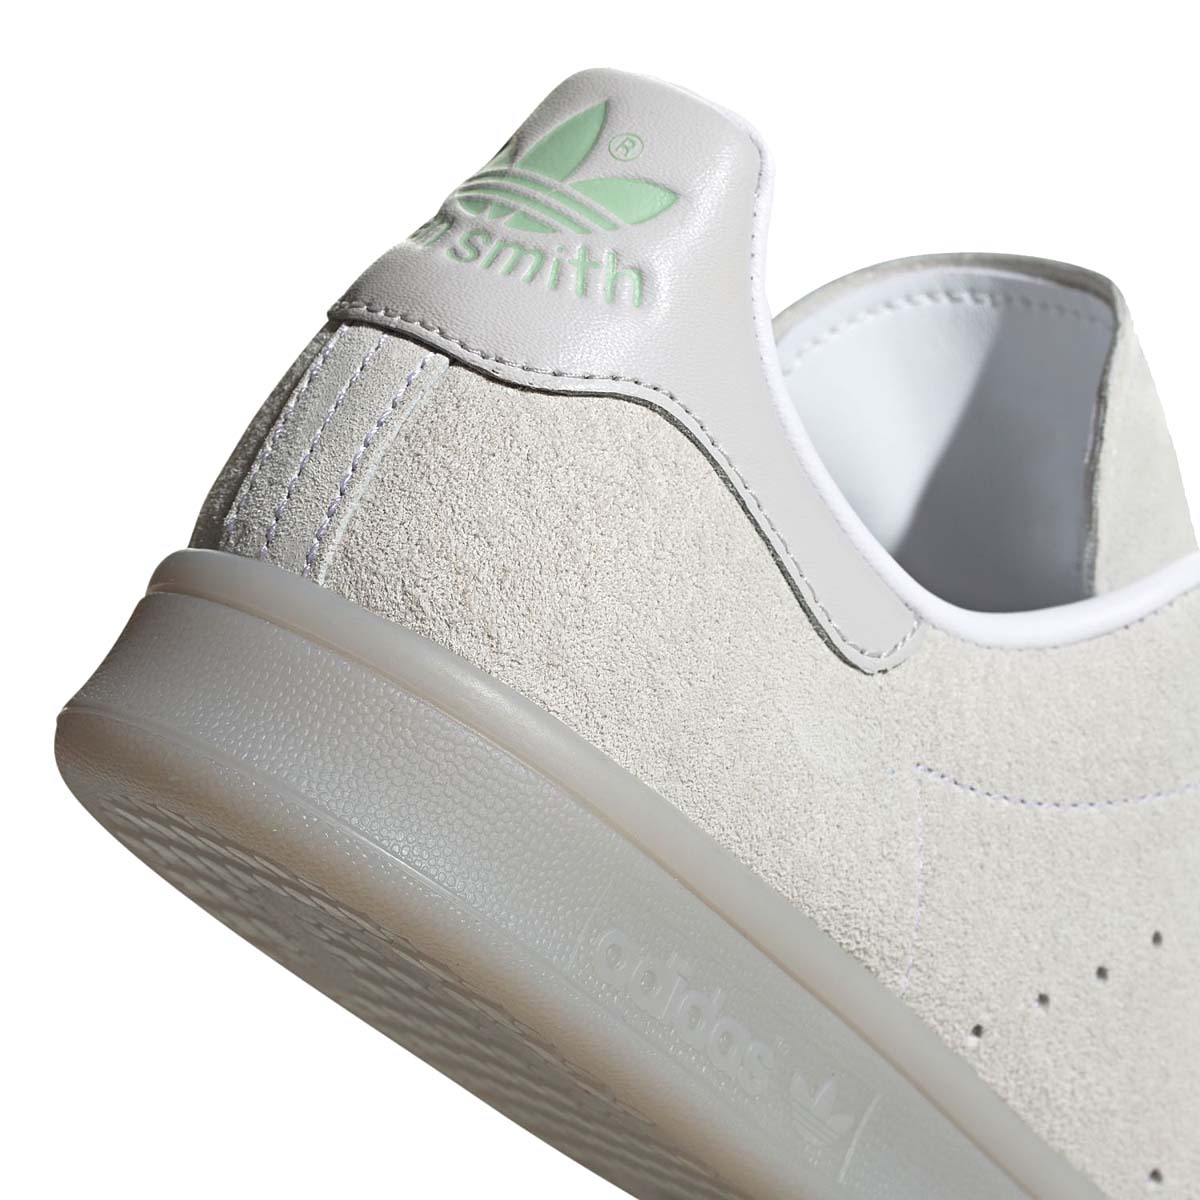 adidas STAN SMITH FOOTWEAR WHITE / BRUSH GREEN / GRAY ONEA FW2639 アディダス スタンスミス オフホワイト/グリーン